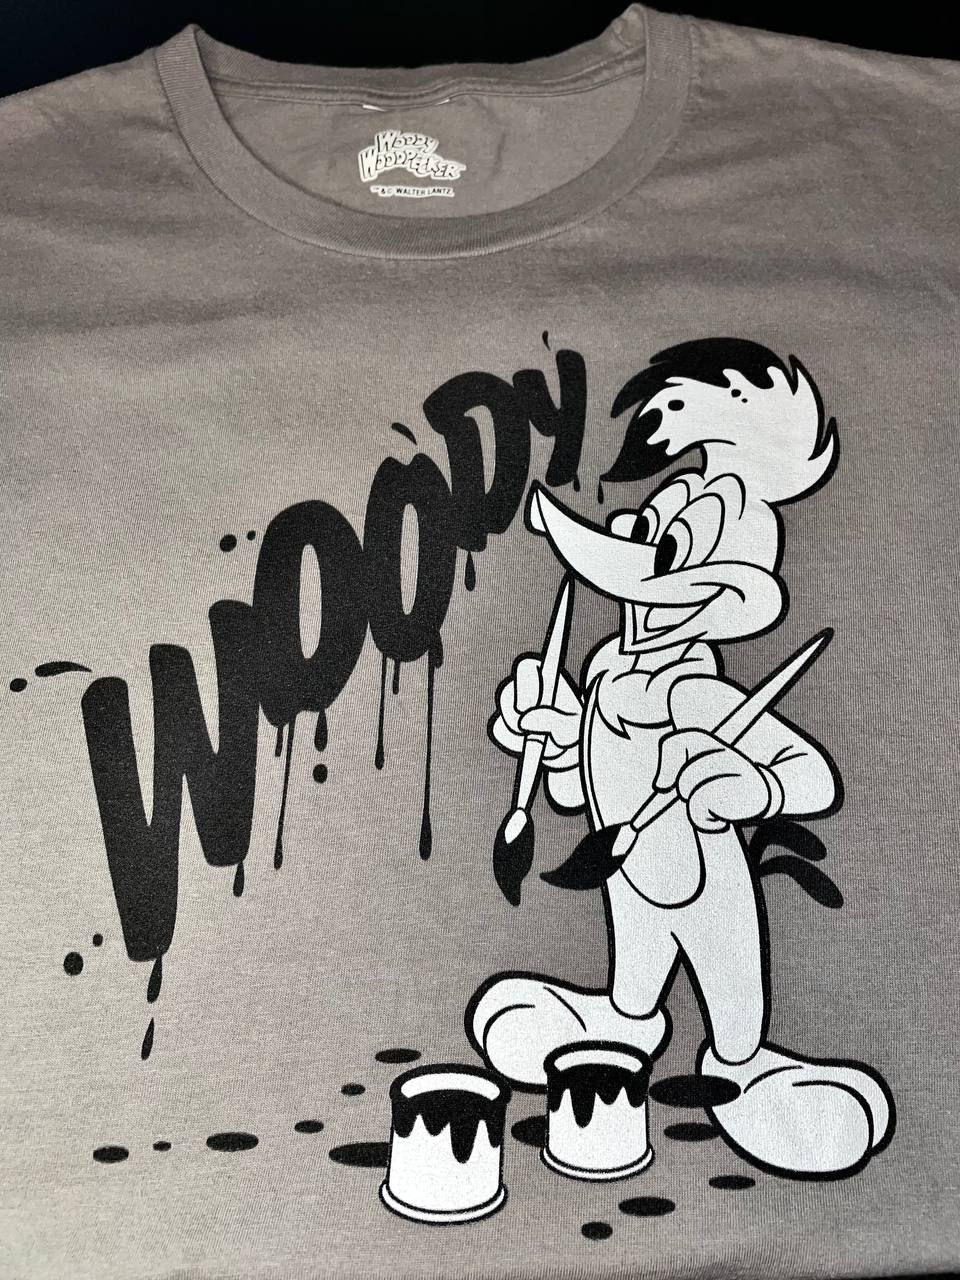 Woody WoodPecker T-Shirt